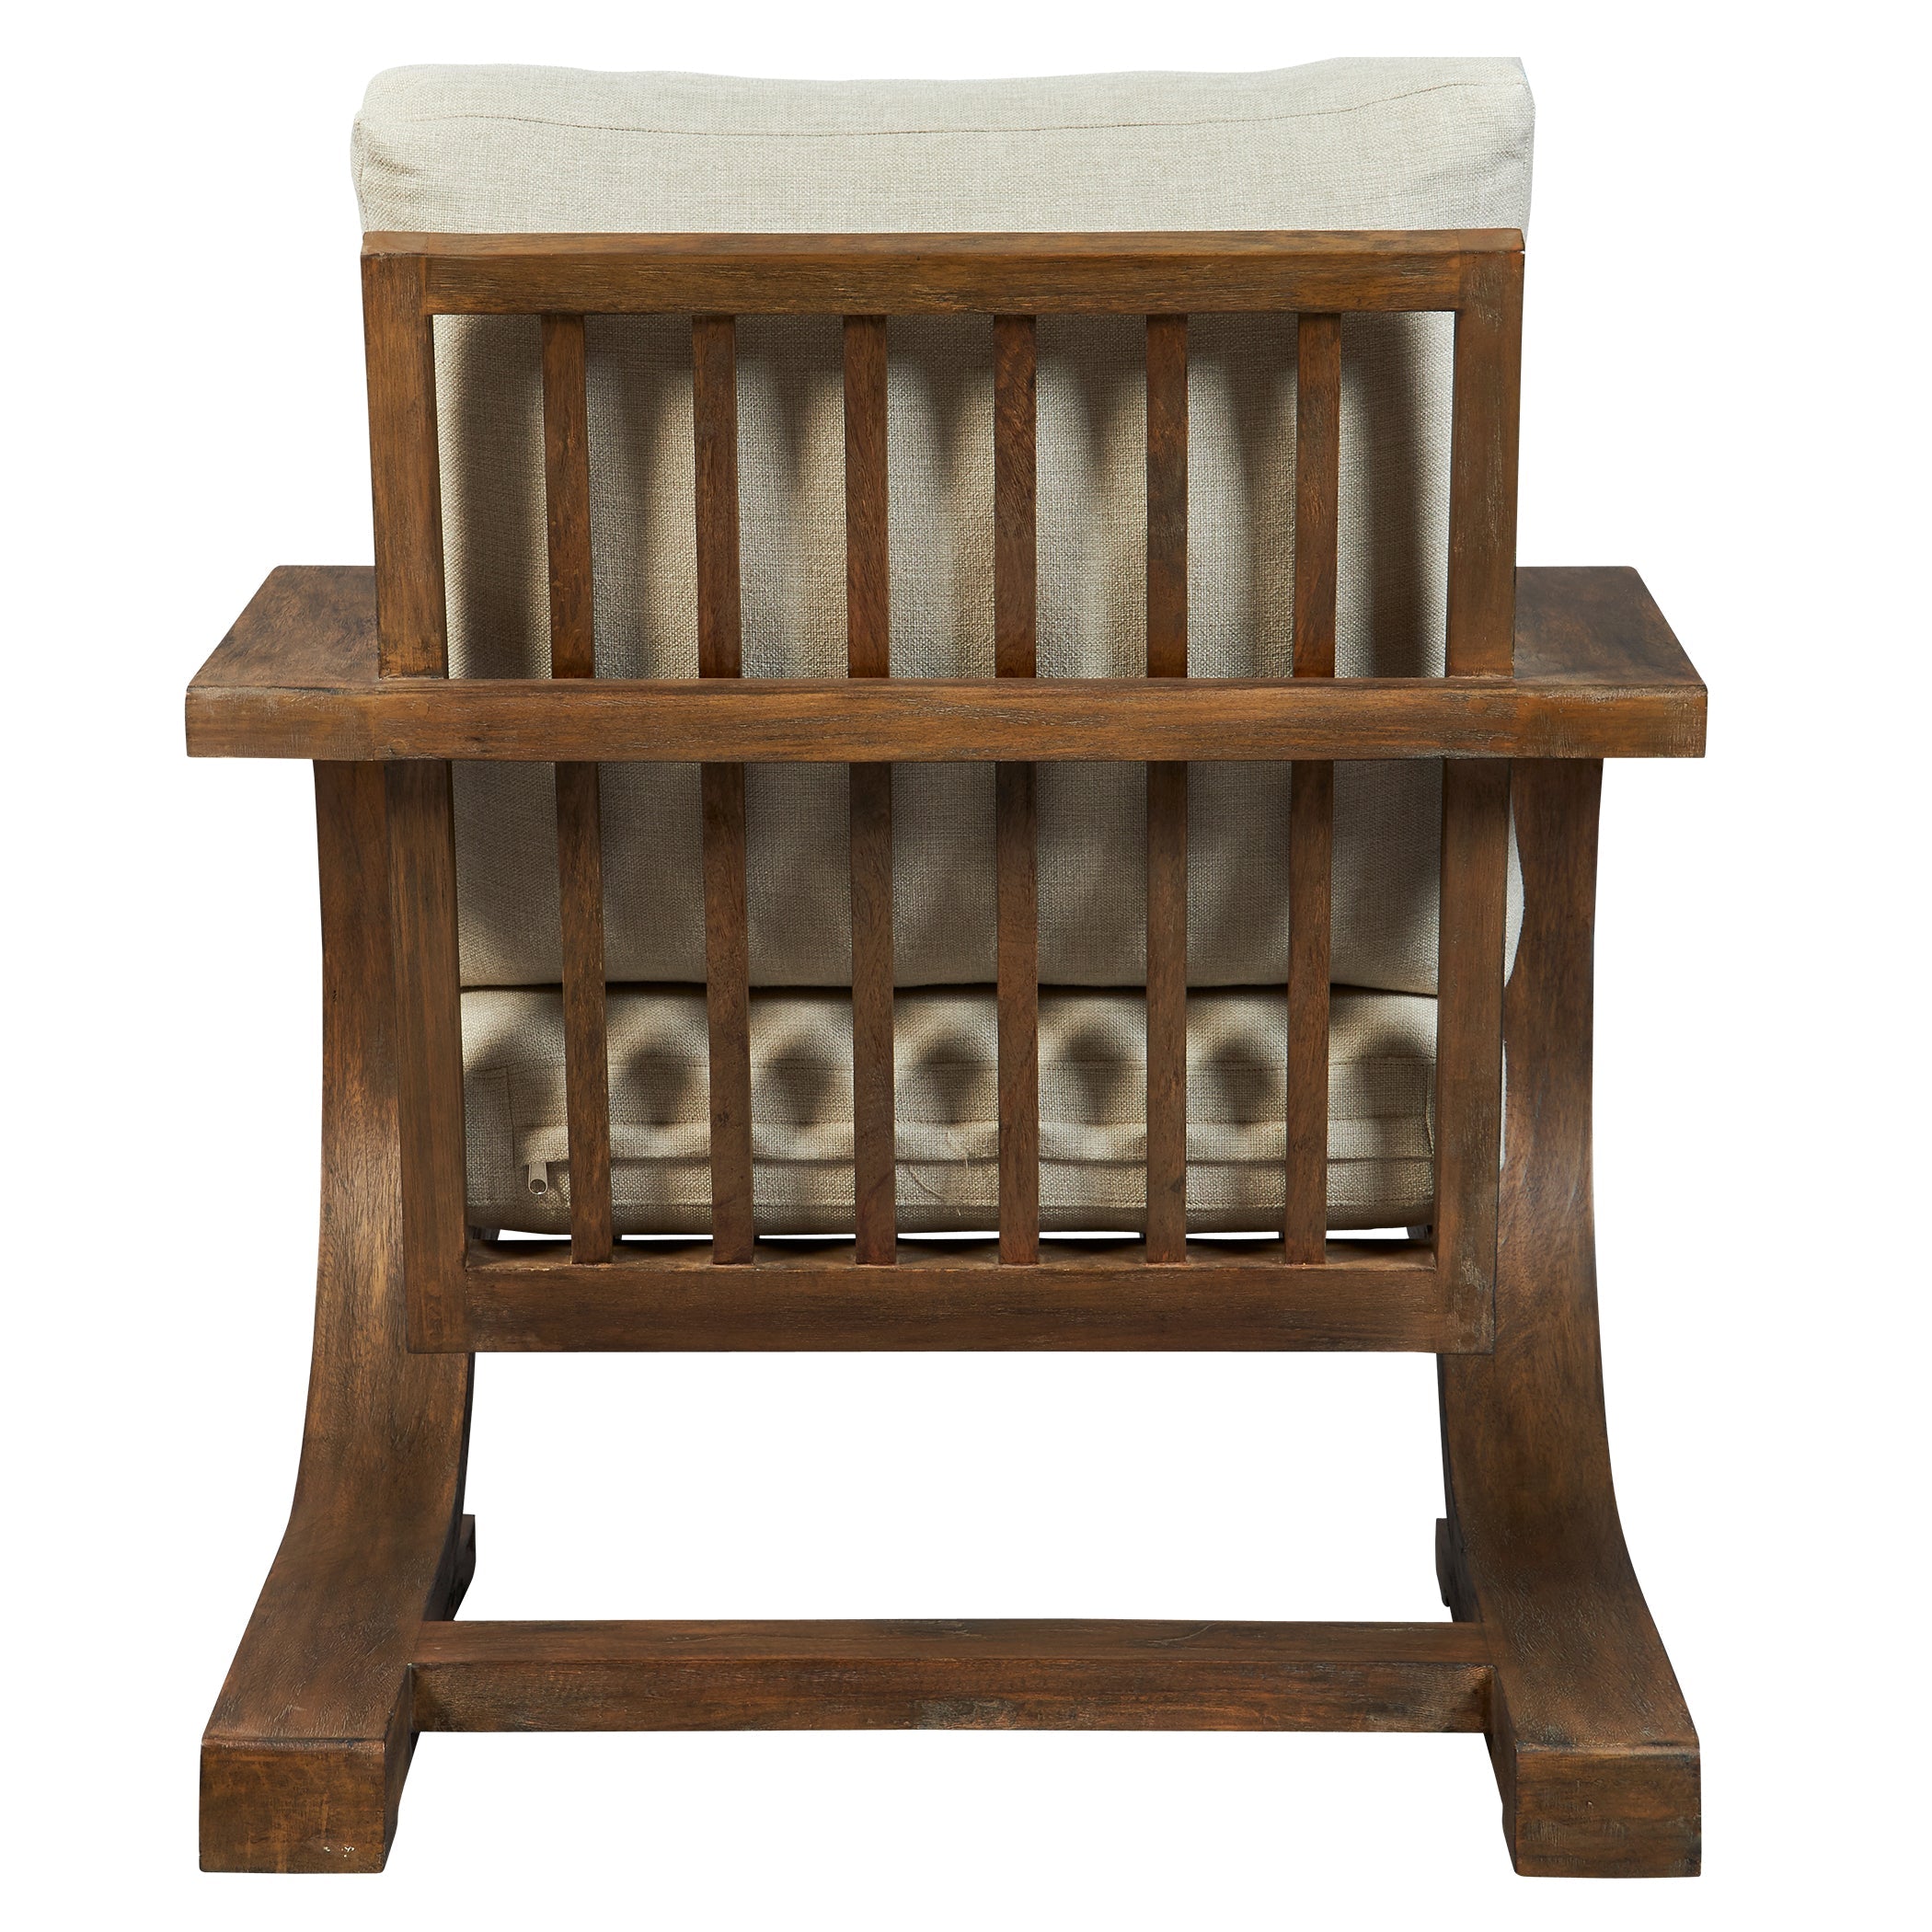 Uttermost Bedrich Wooden Accent Chair